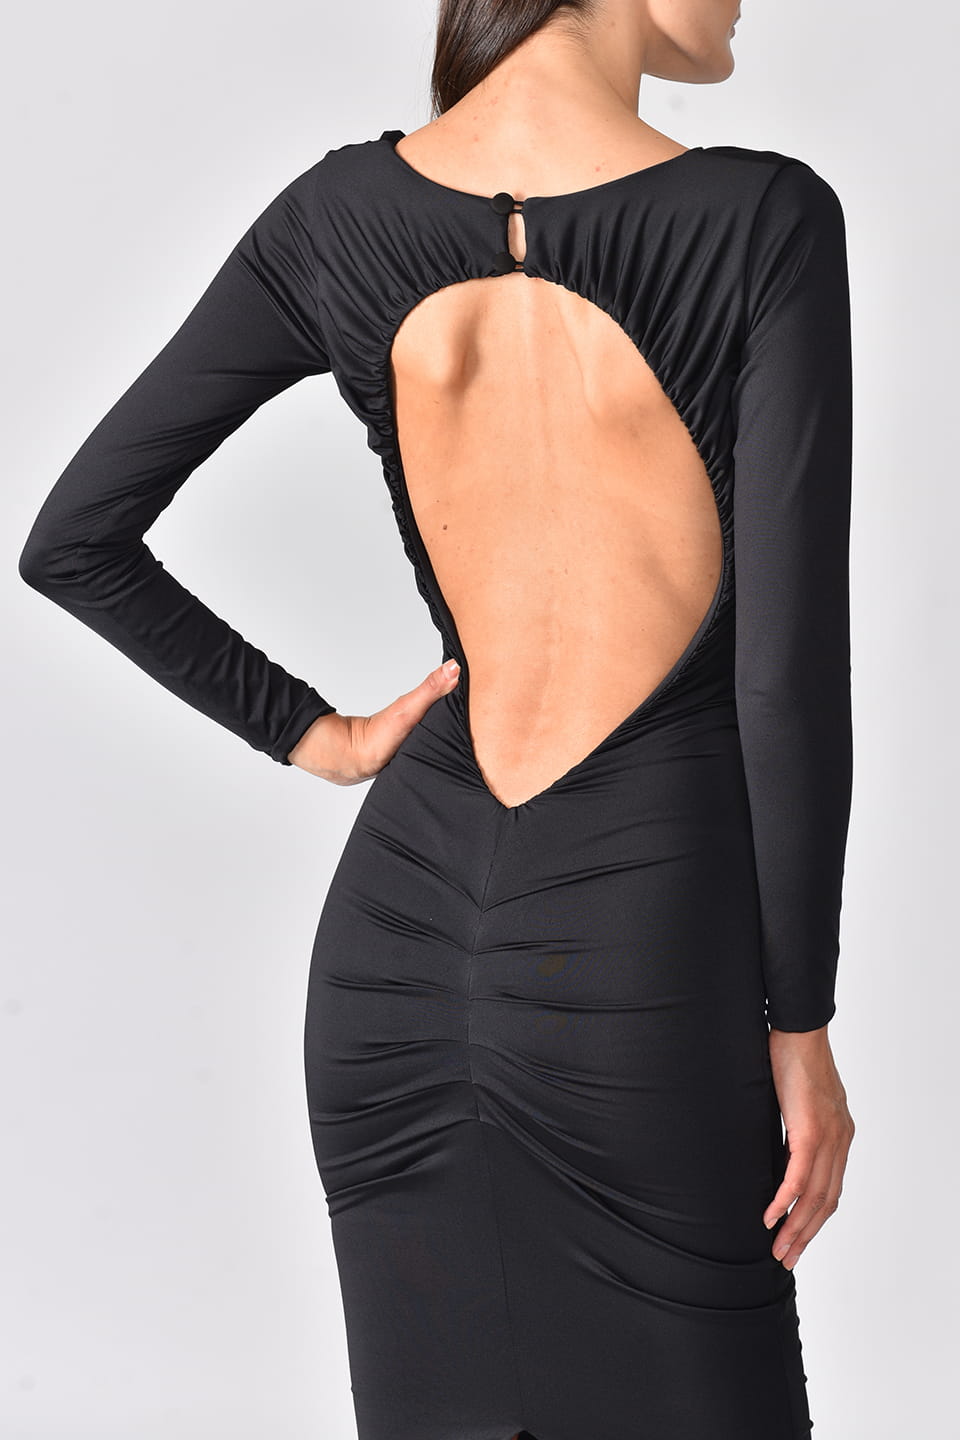 backless dress in black color from fashion designer